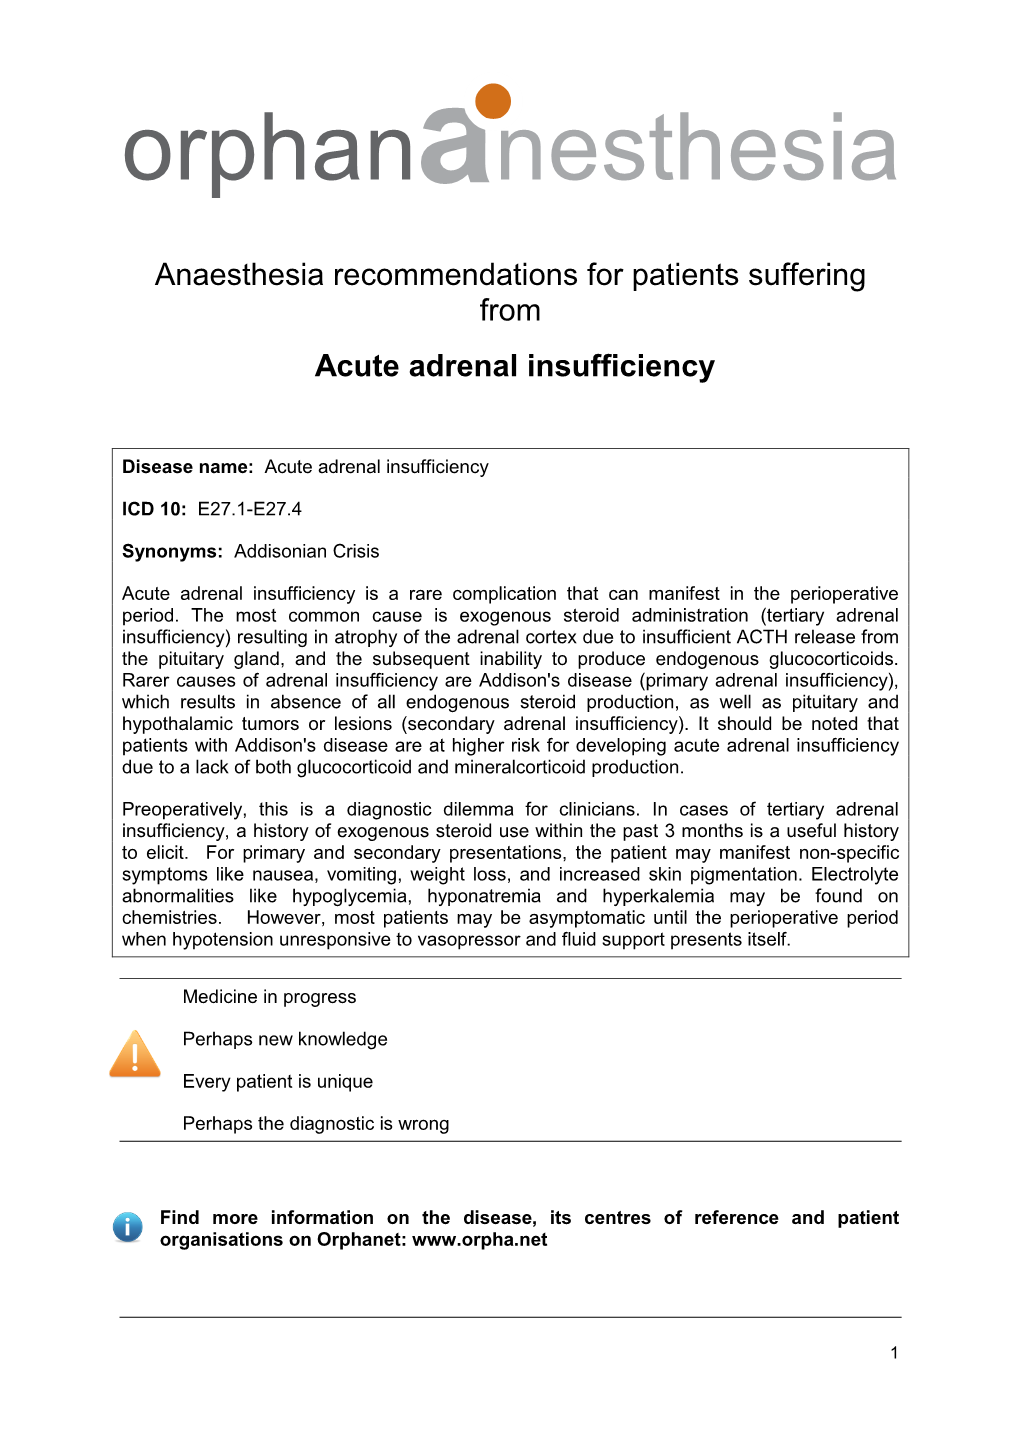 Acute Adrenal Insufficiency